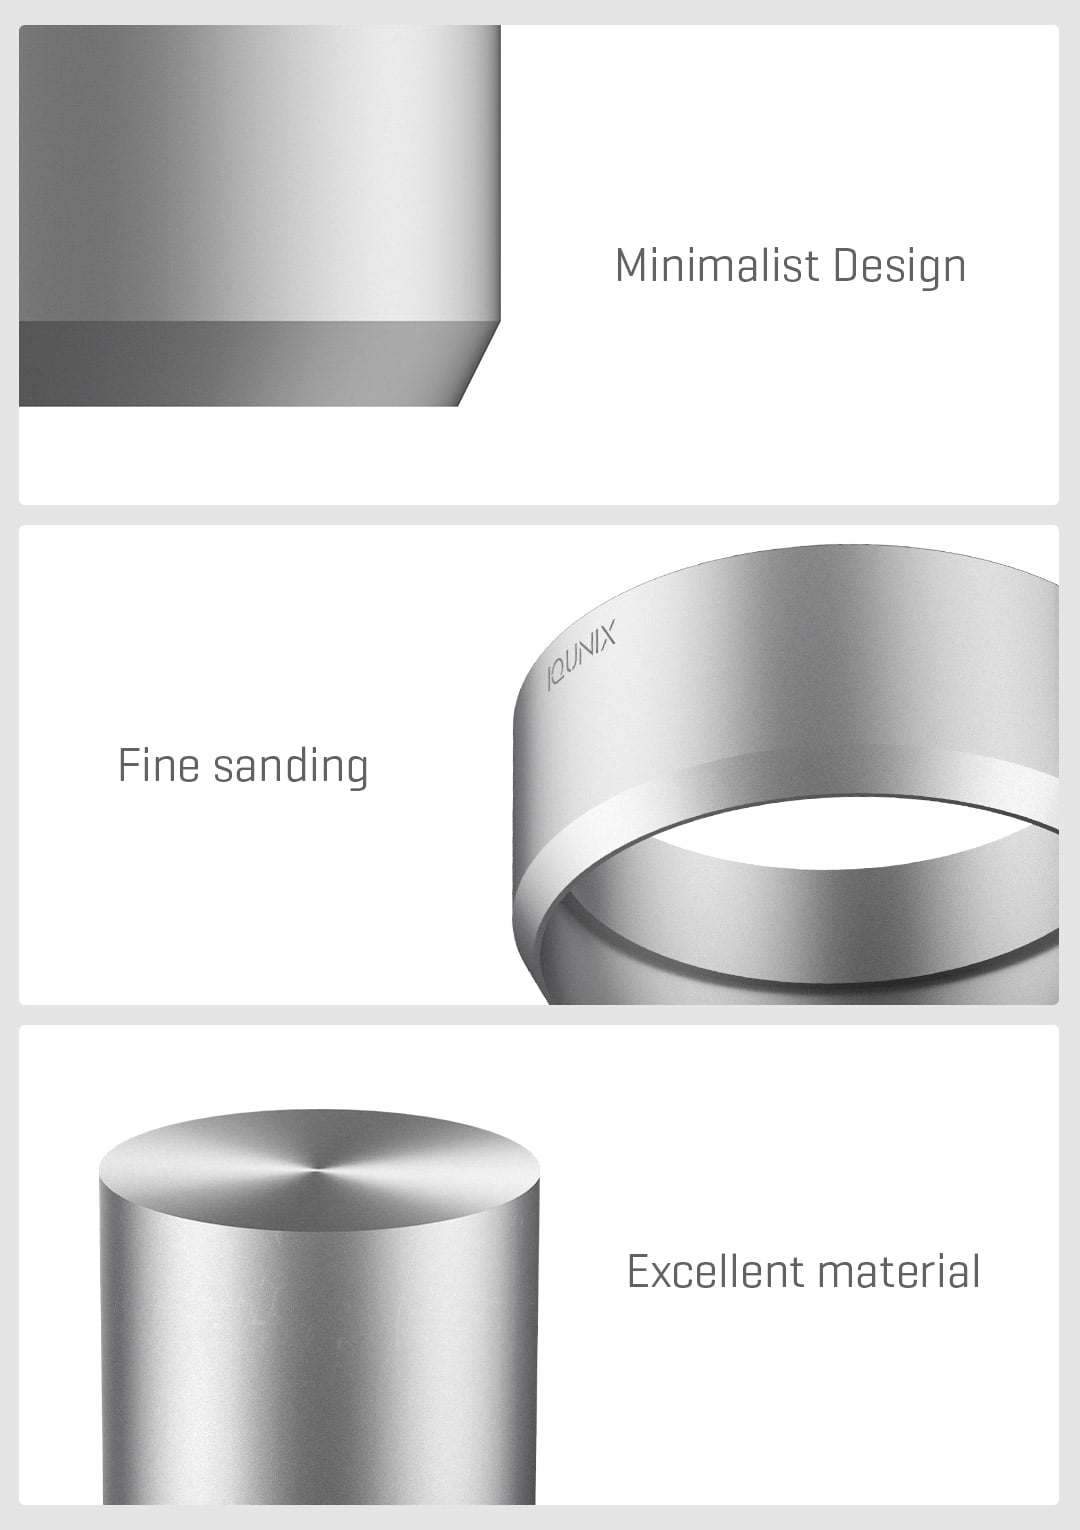 Minimalist Design Fine sanding Excellent material